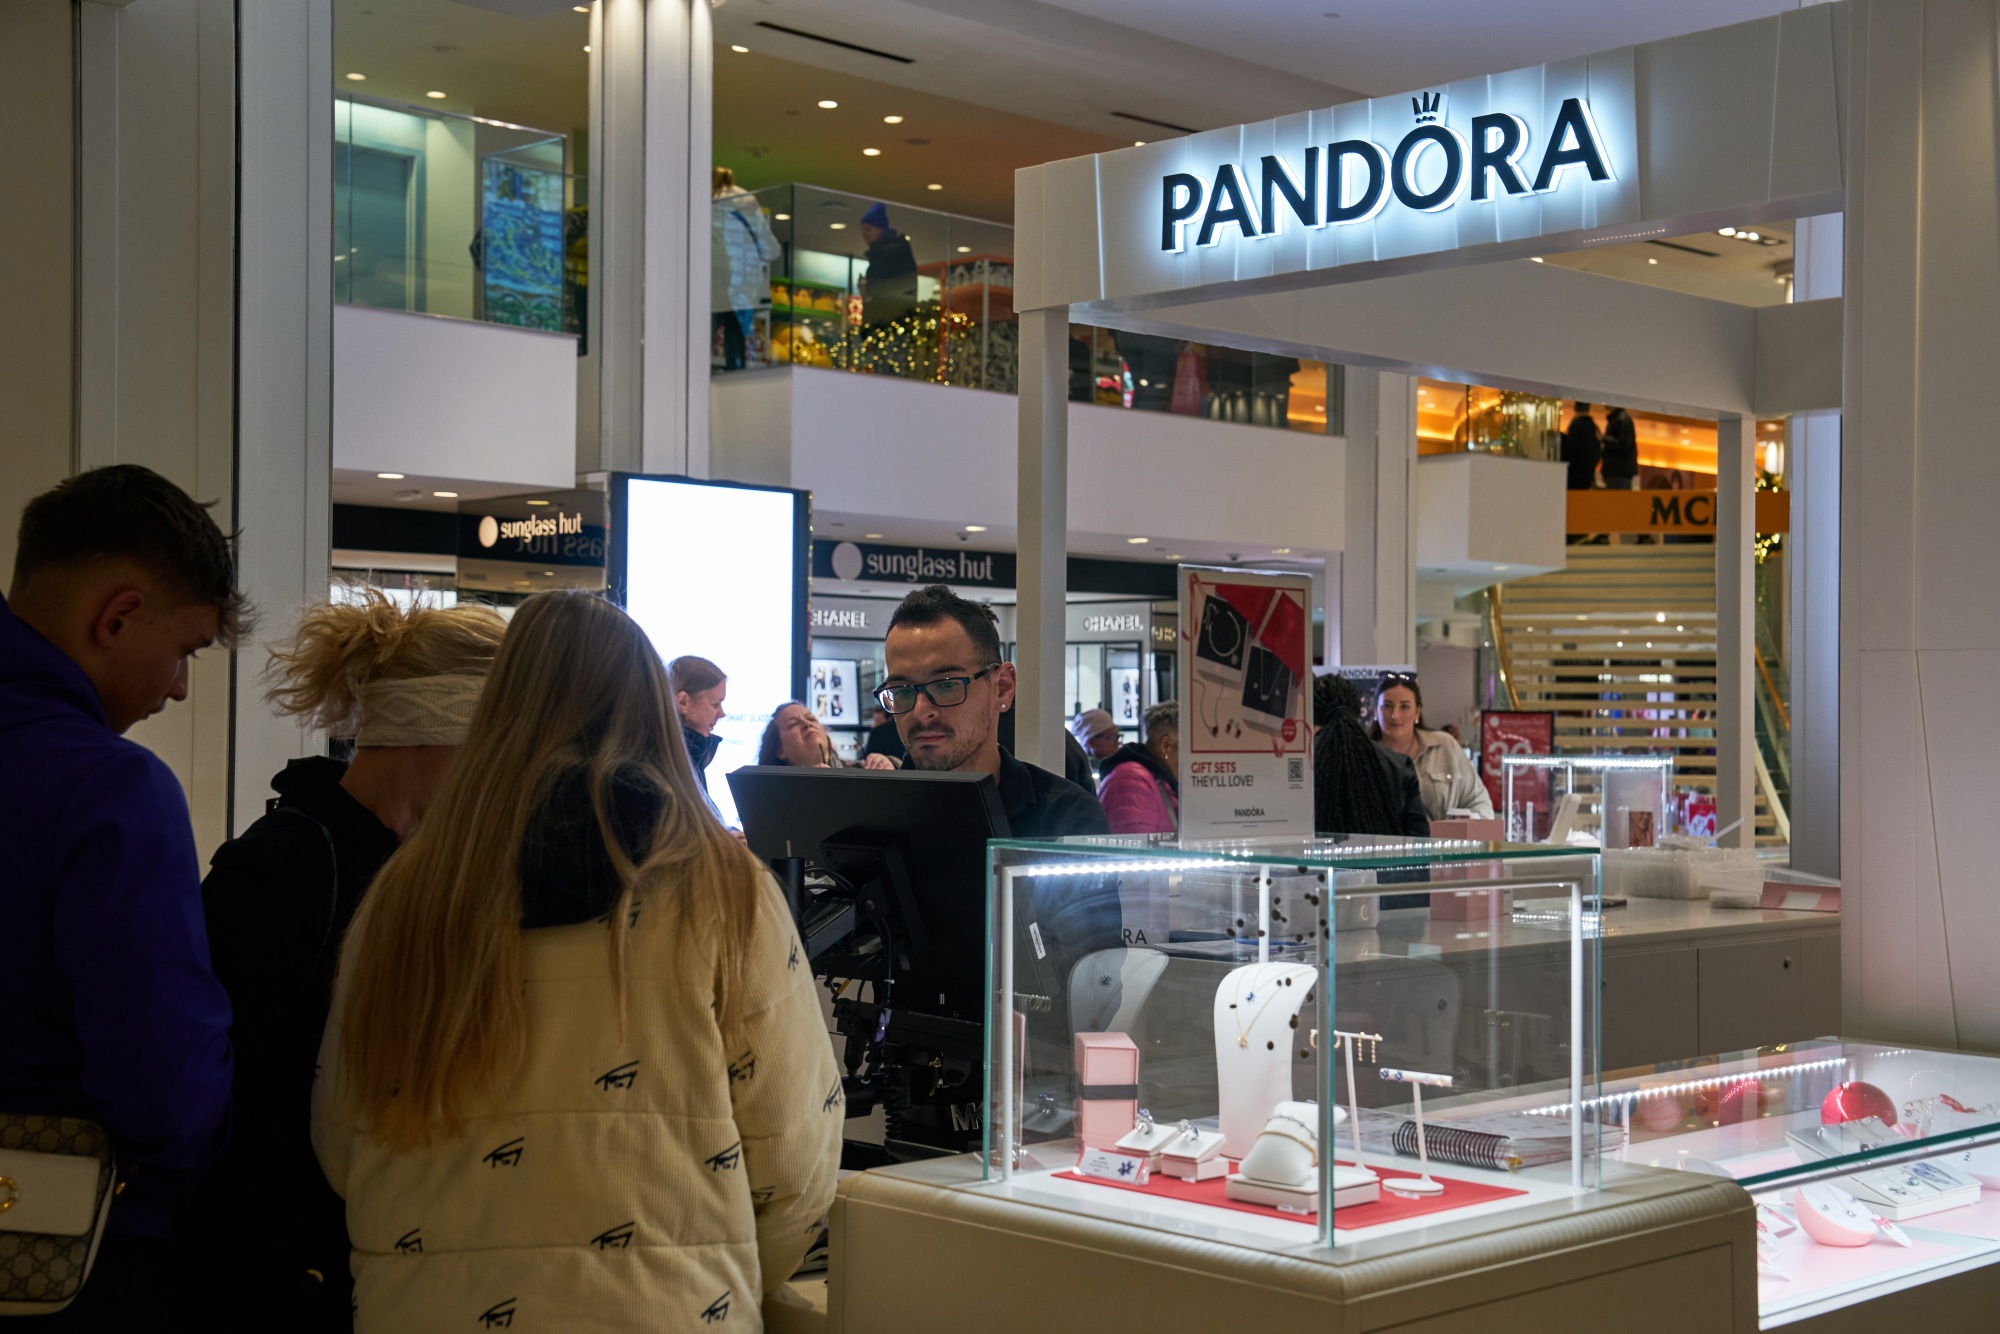 Your Pandora deserves the - Pandora Store at Summit Mall